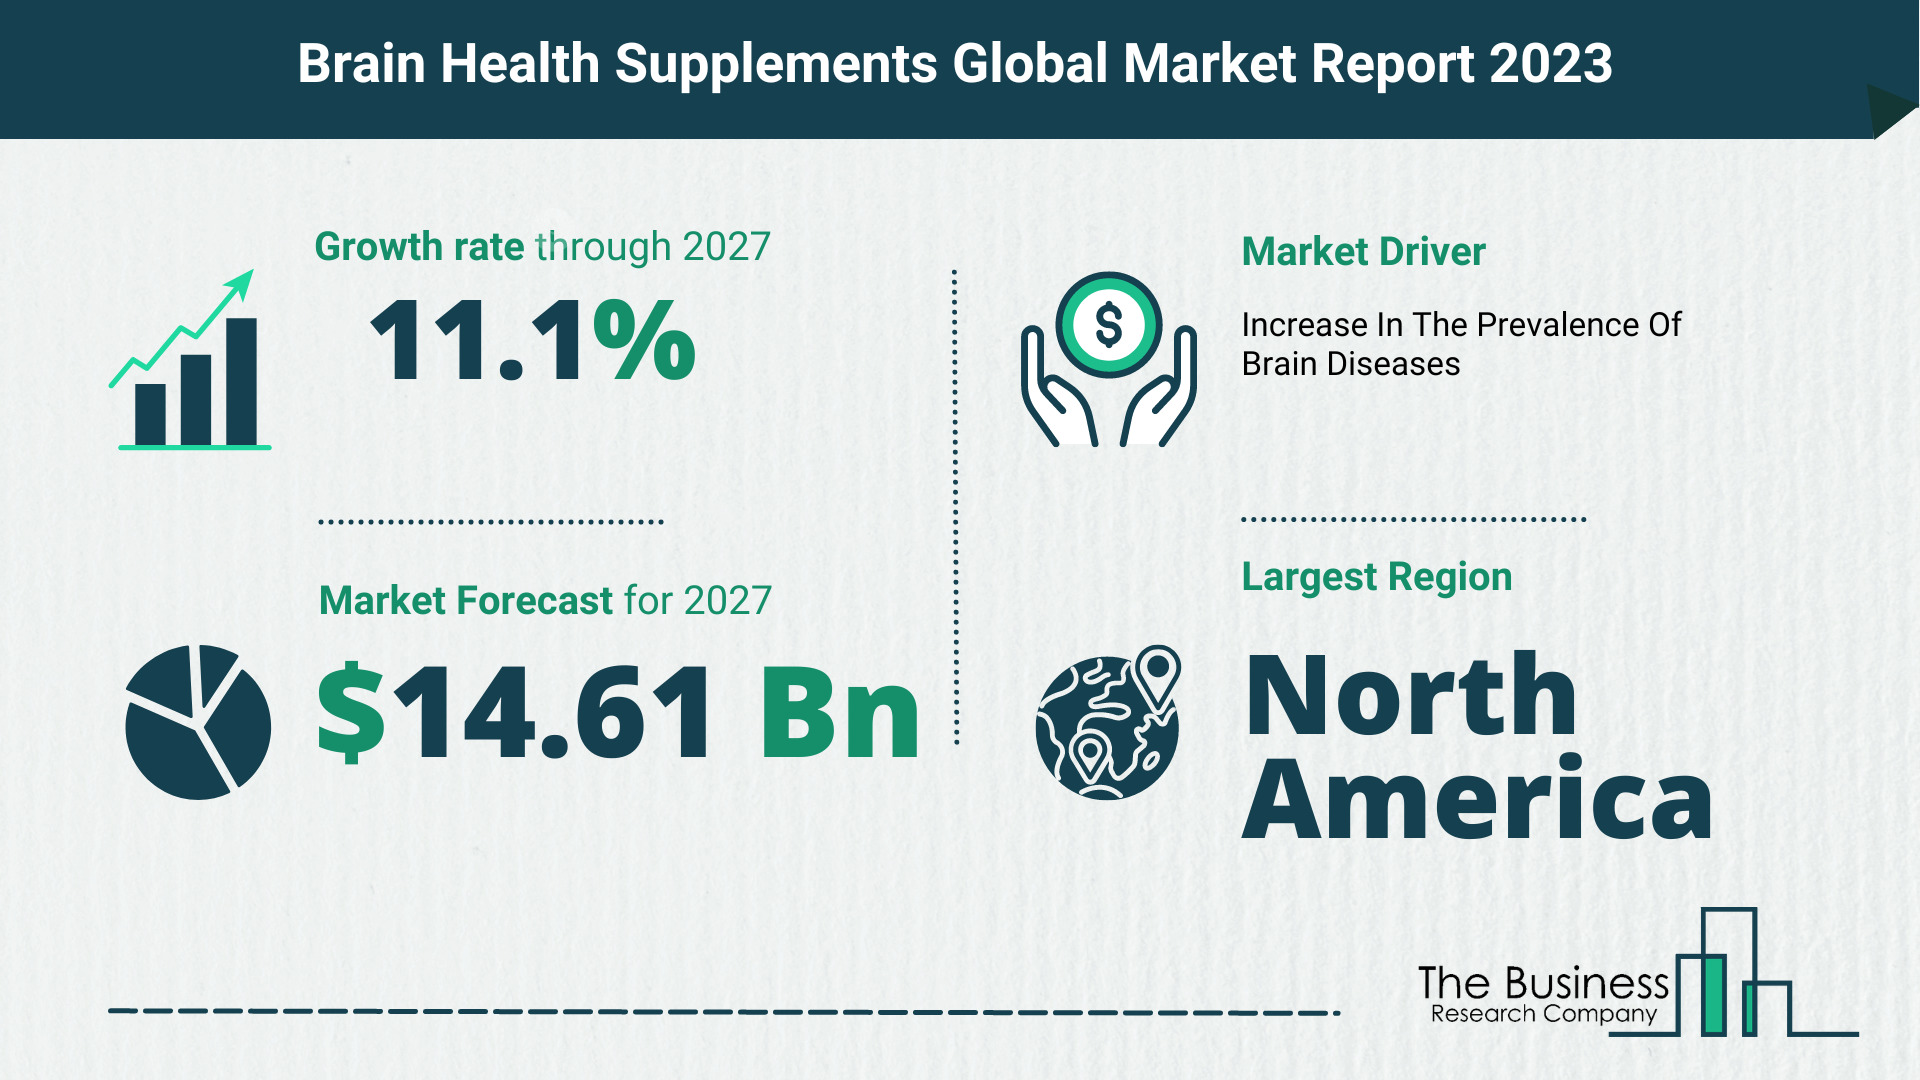 Global Brain Health Supplements Market